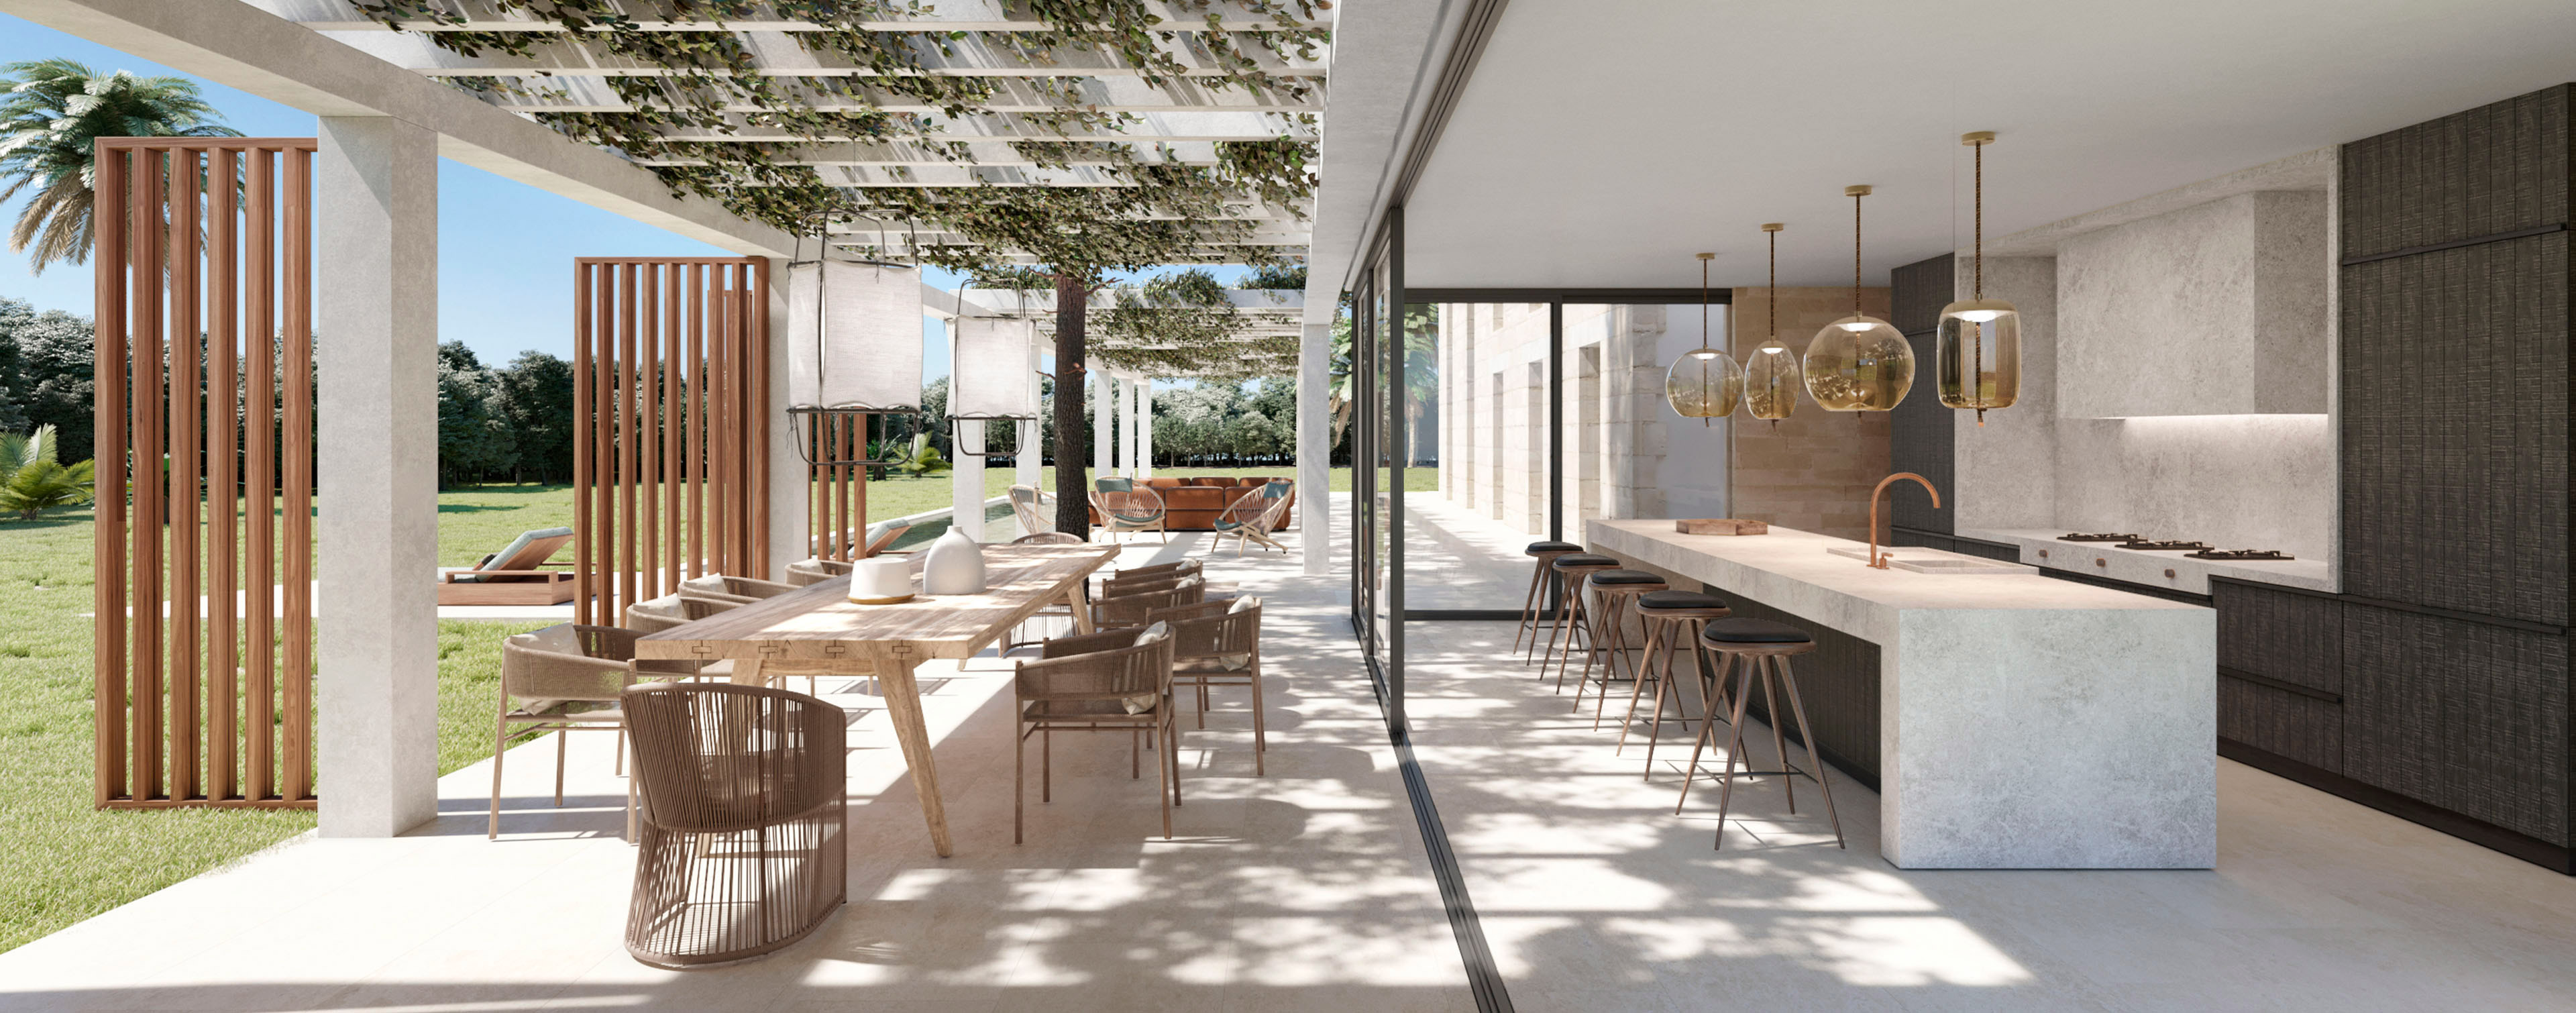 luv studio luxury architects menorca sa vigia house IMG 01 - LUV Studio - Arquitectura y diseño - Barcelona